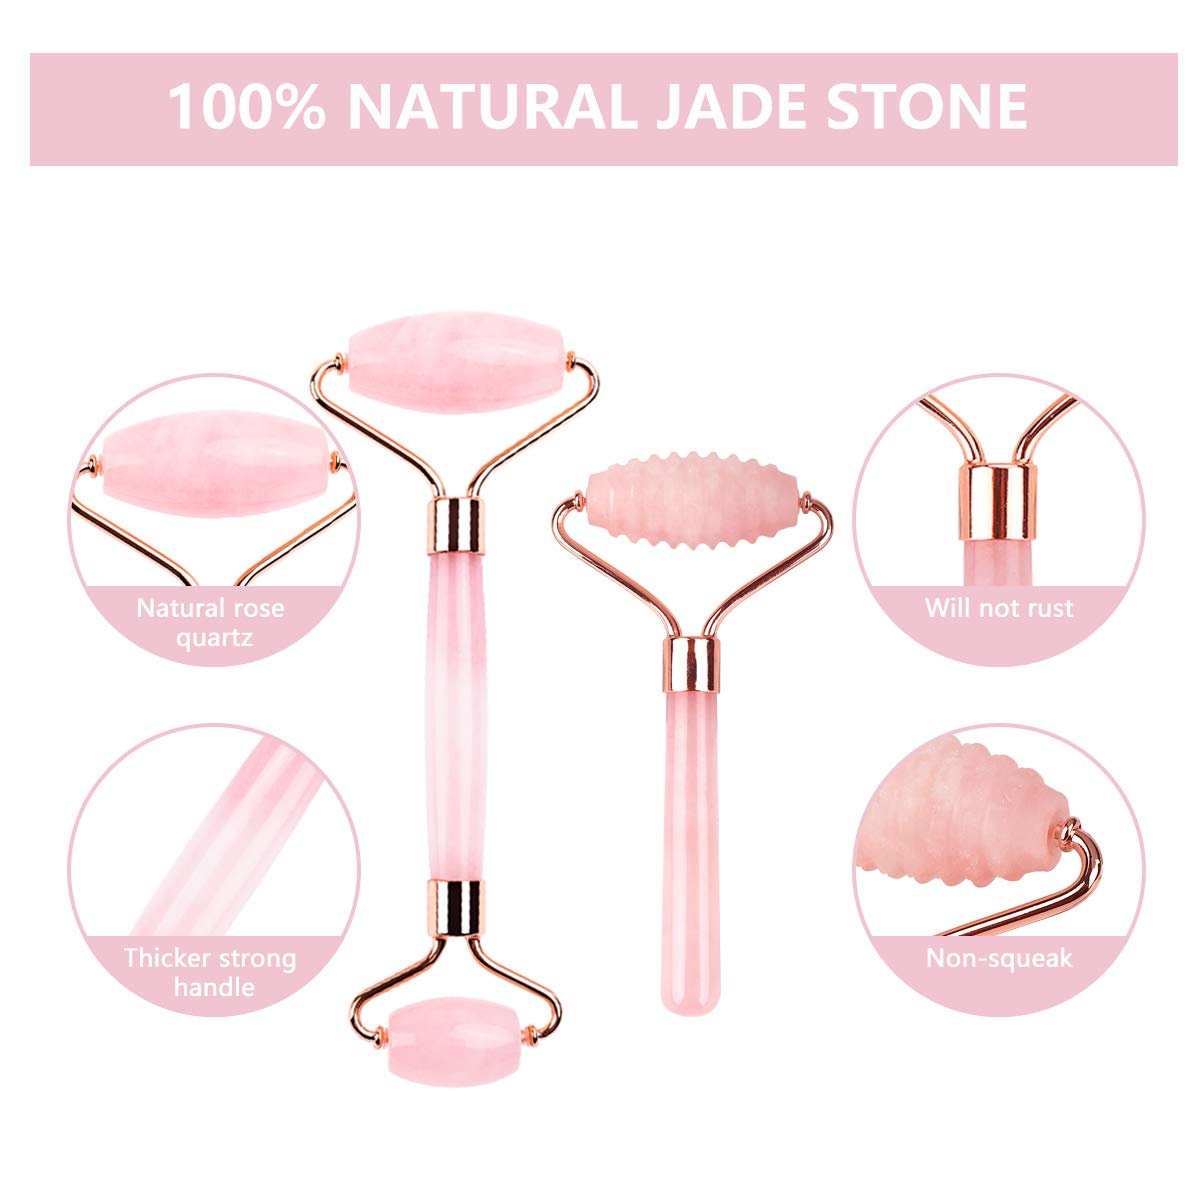 Gift Set Rose Jade Roller Gua Sha Set Face Brush